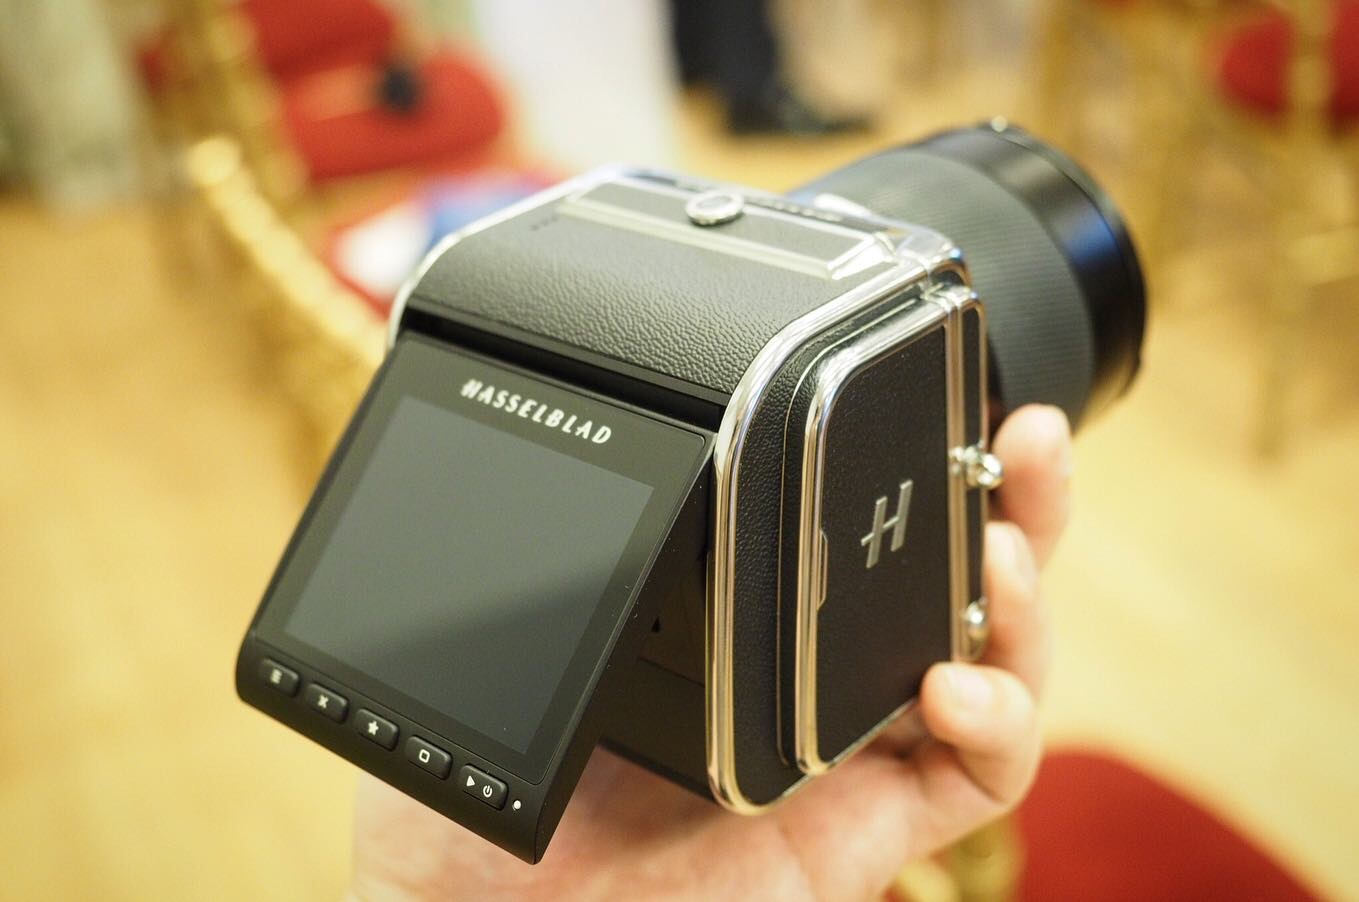 New life for old cameras: The I'm Back digital camera back brings